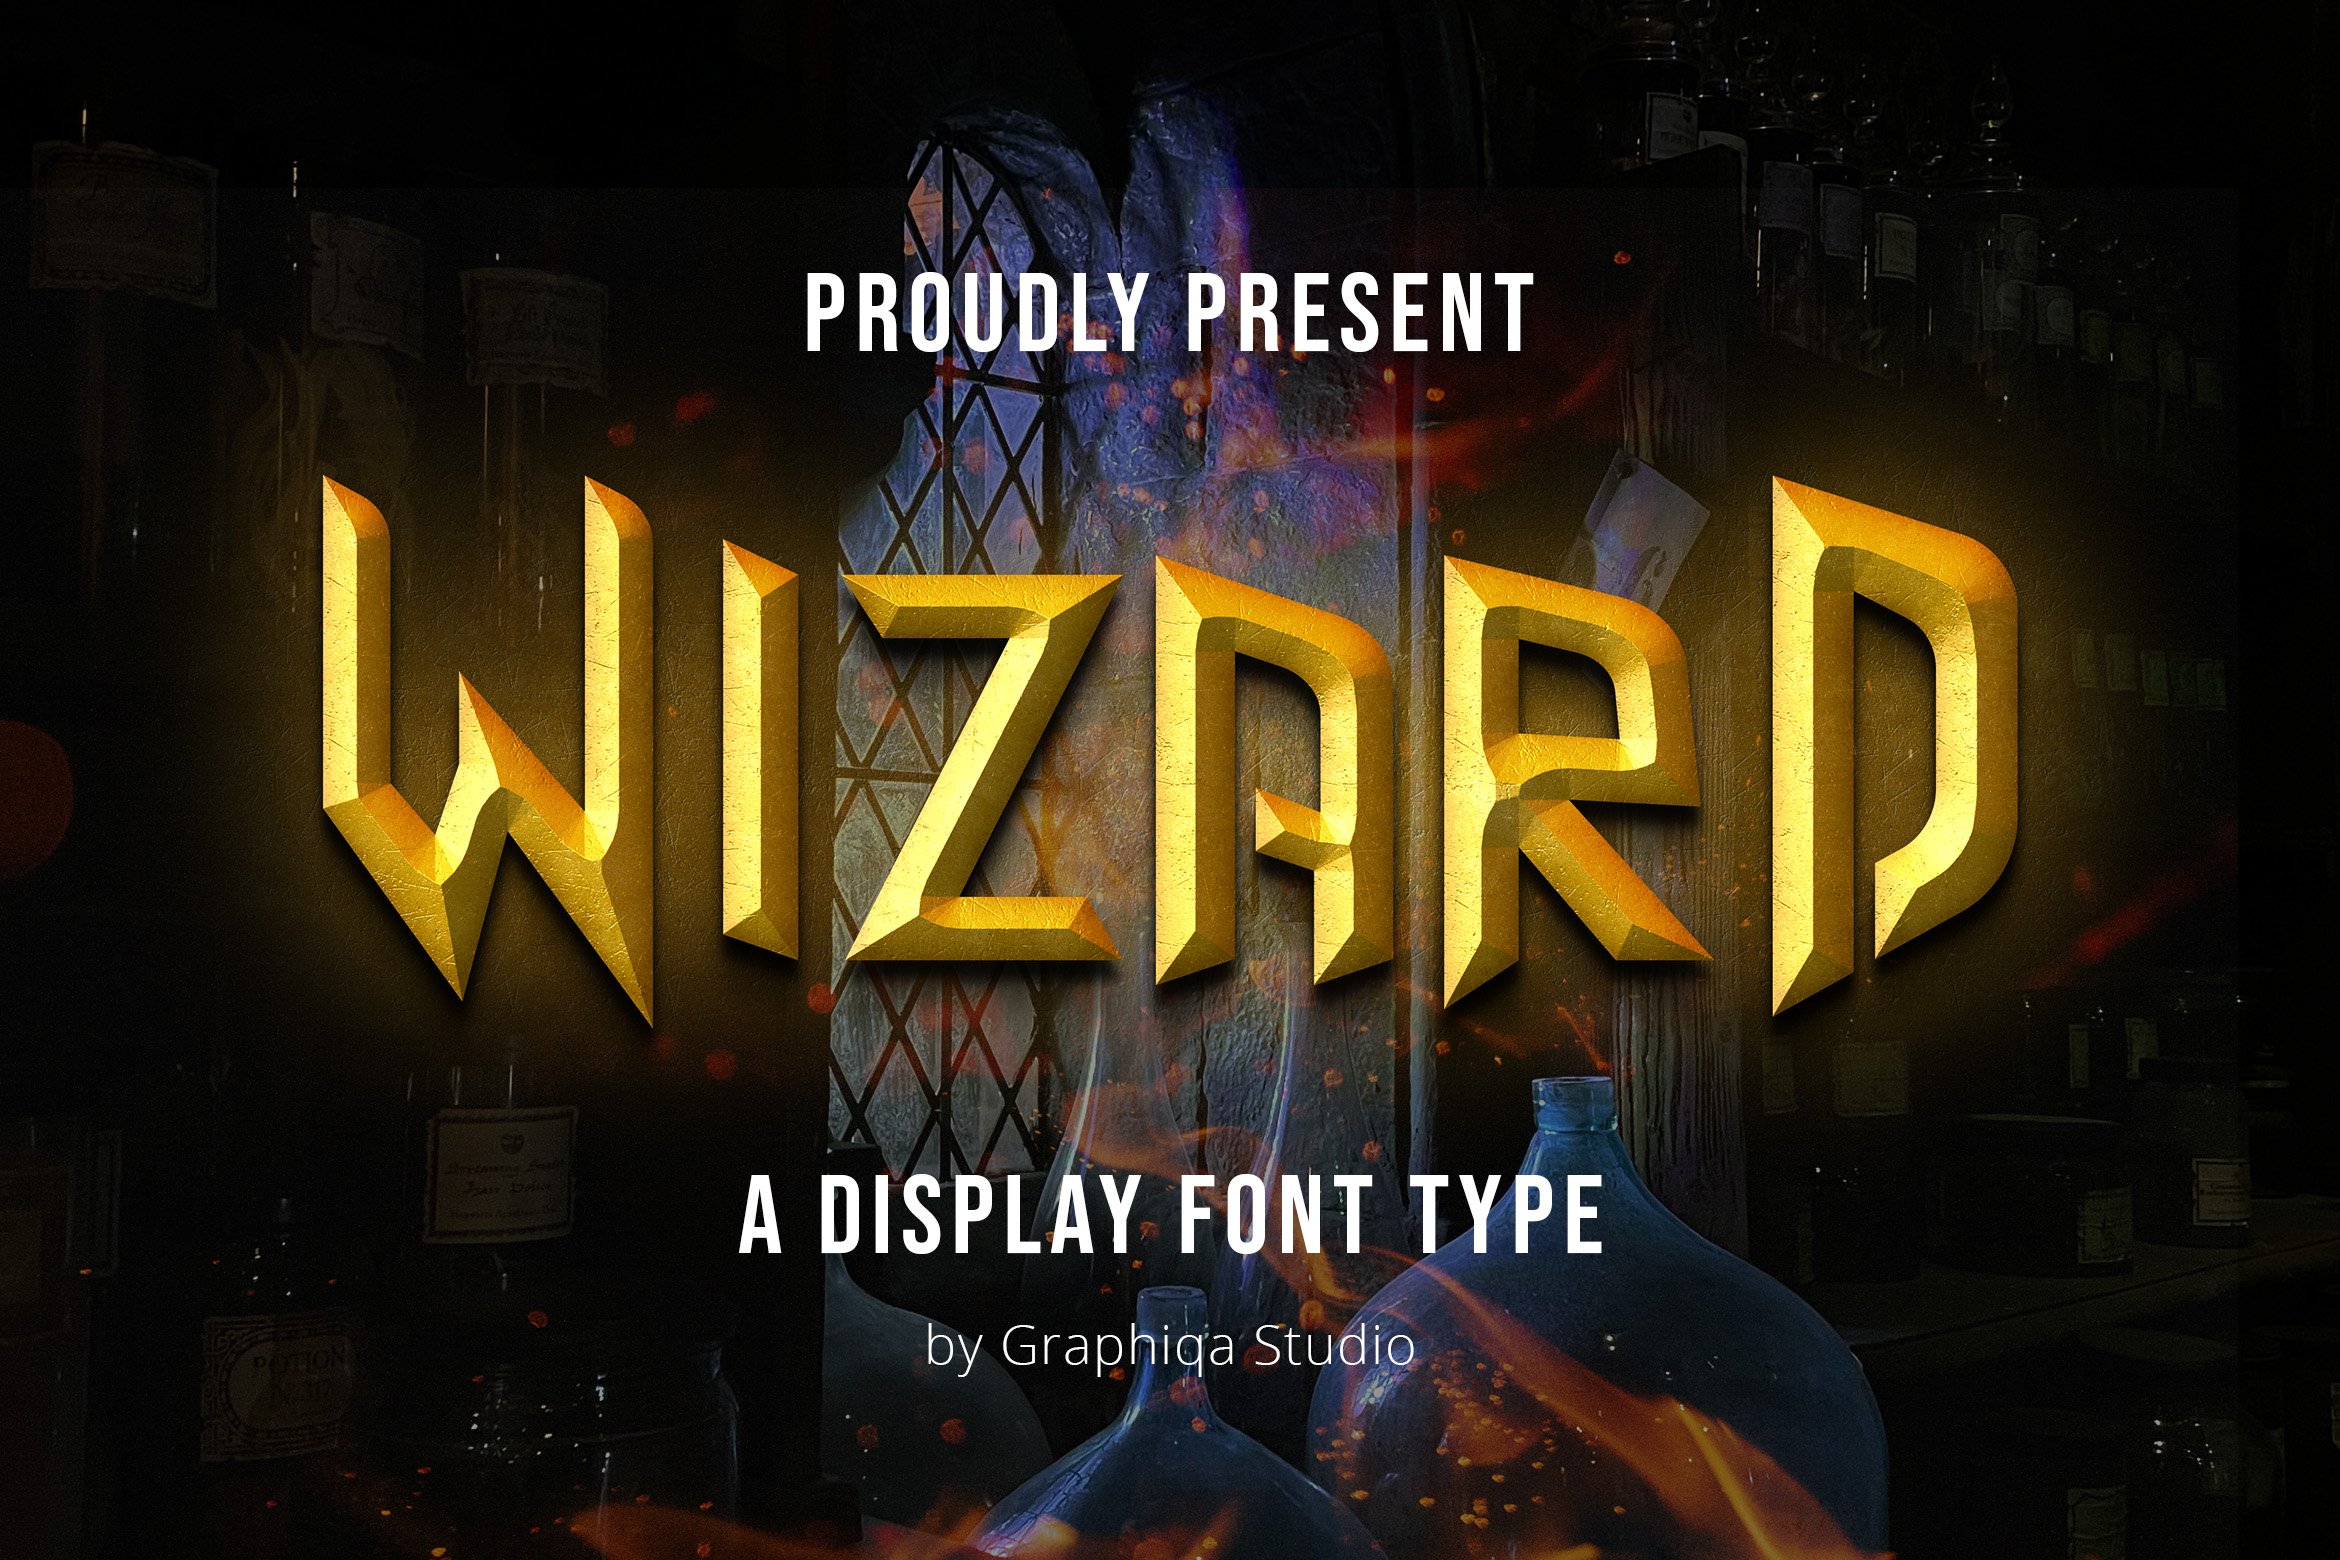 Wizard - Magic Display Font cover image.